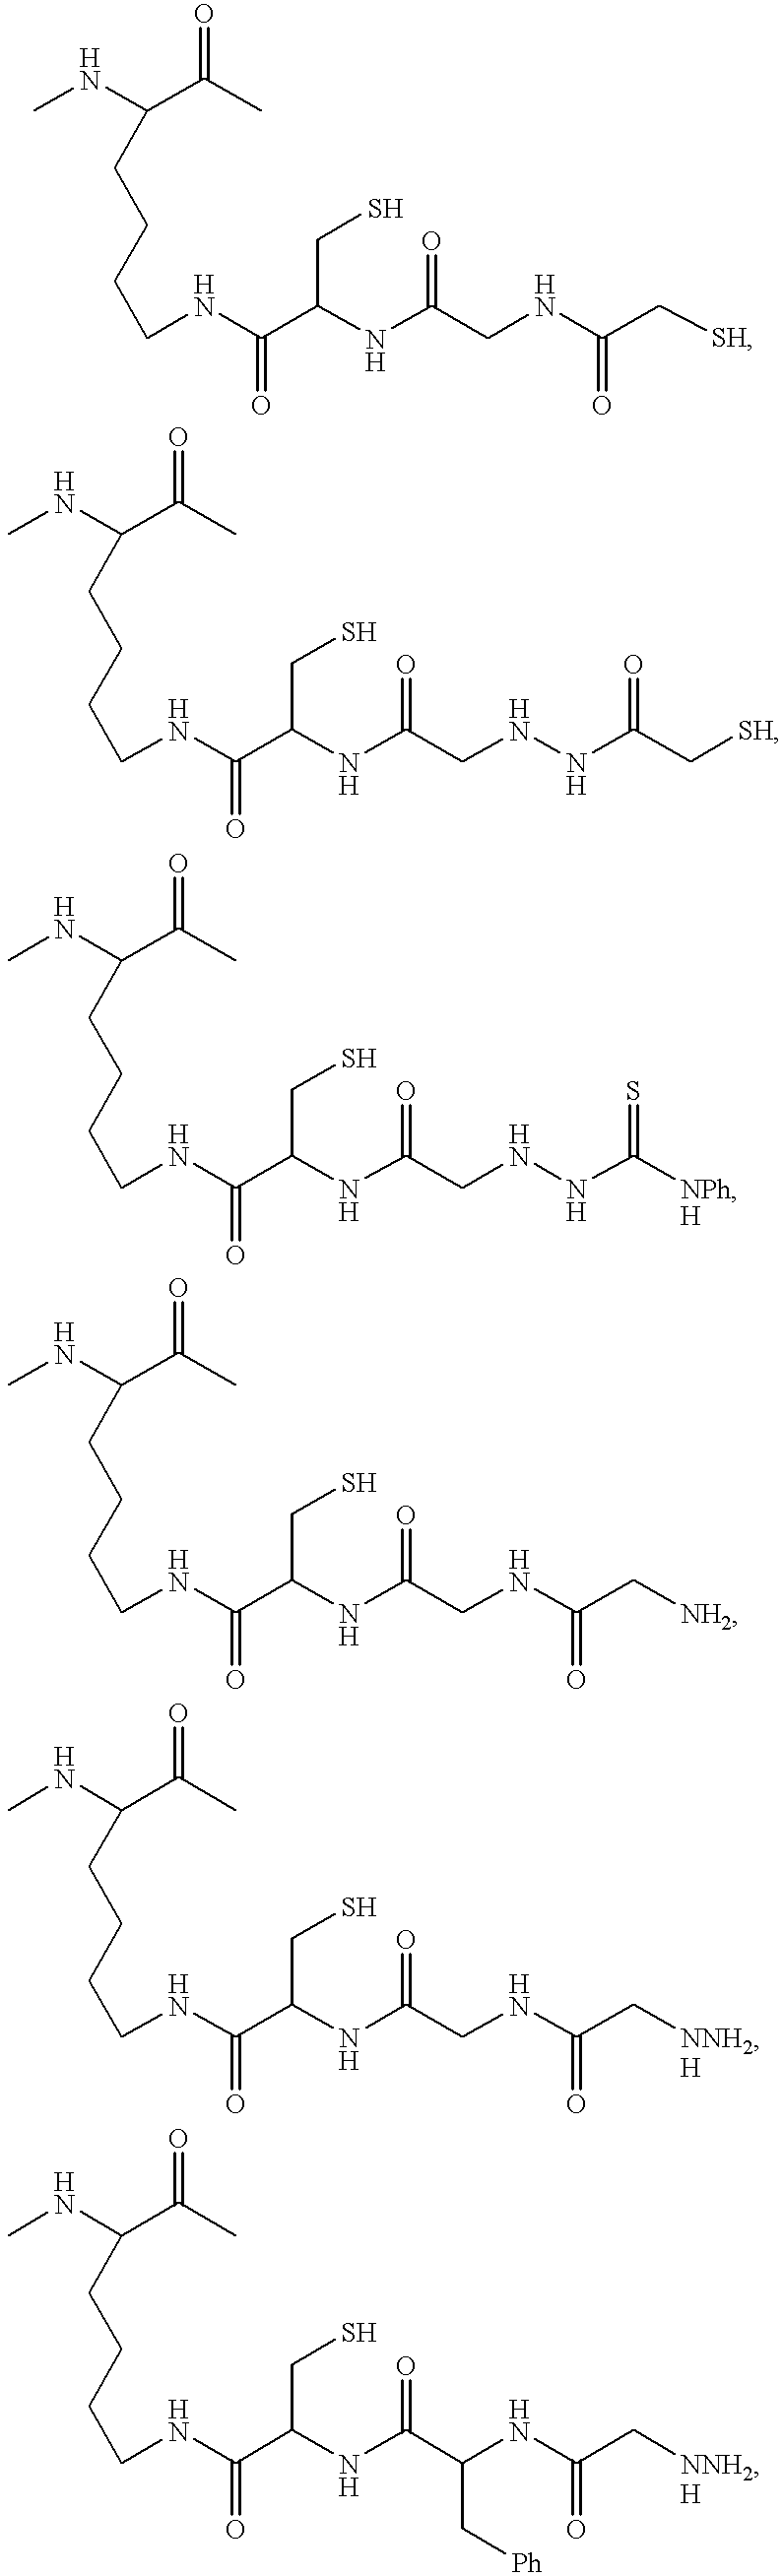 Radiometal-binding analogues of luteinizing hormone releasing hormone